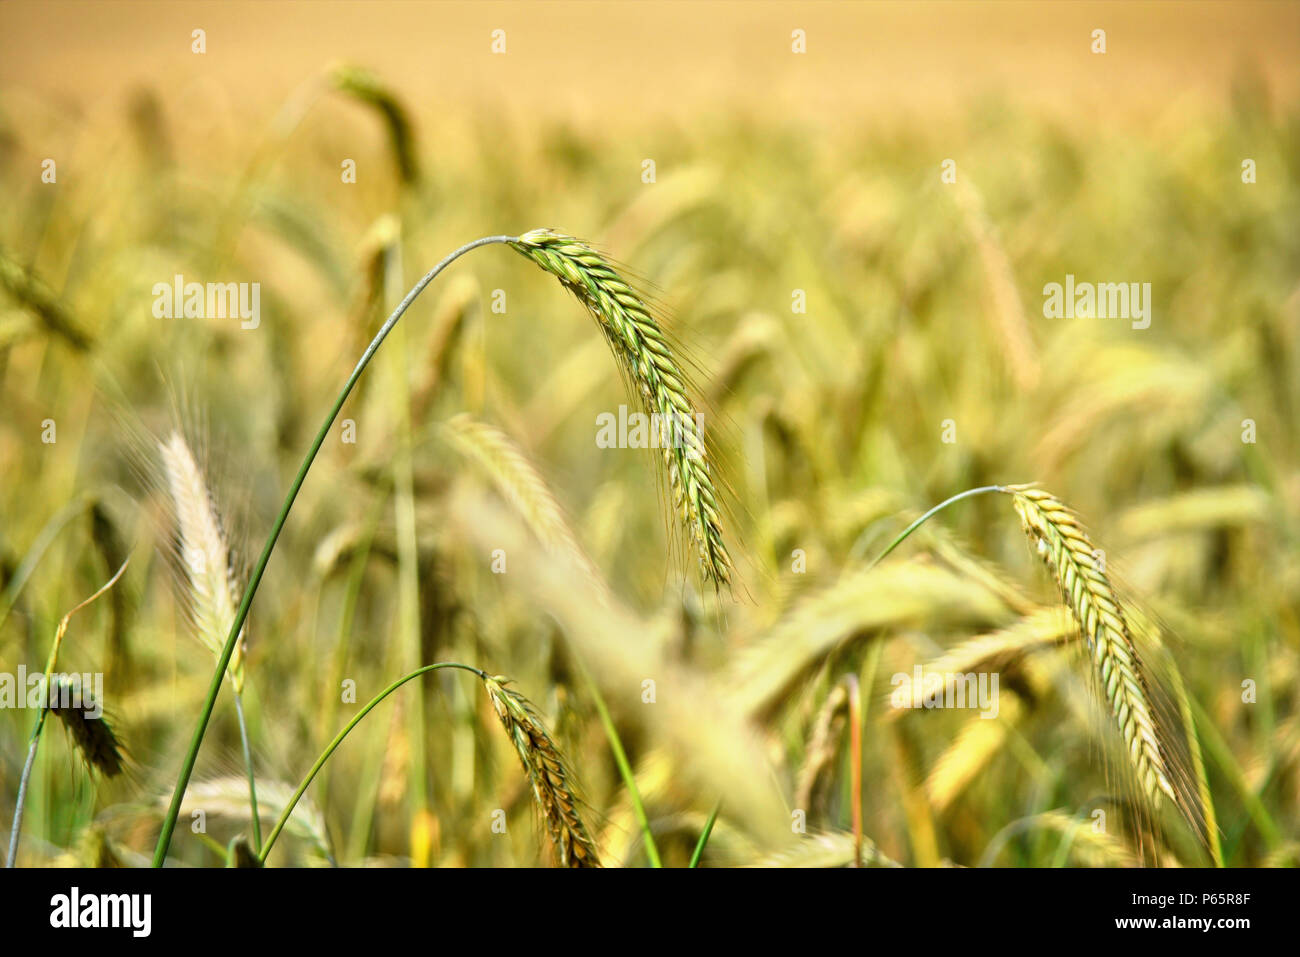 Golden rye field or wheat field in the sun, autumn scene. Stock Photo